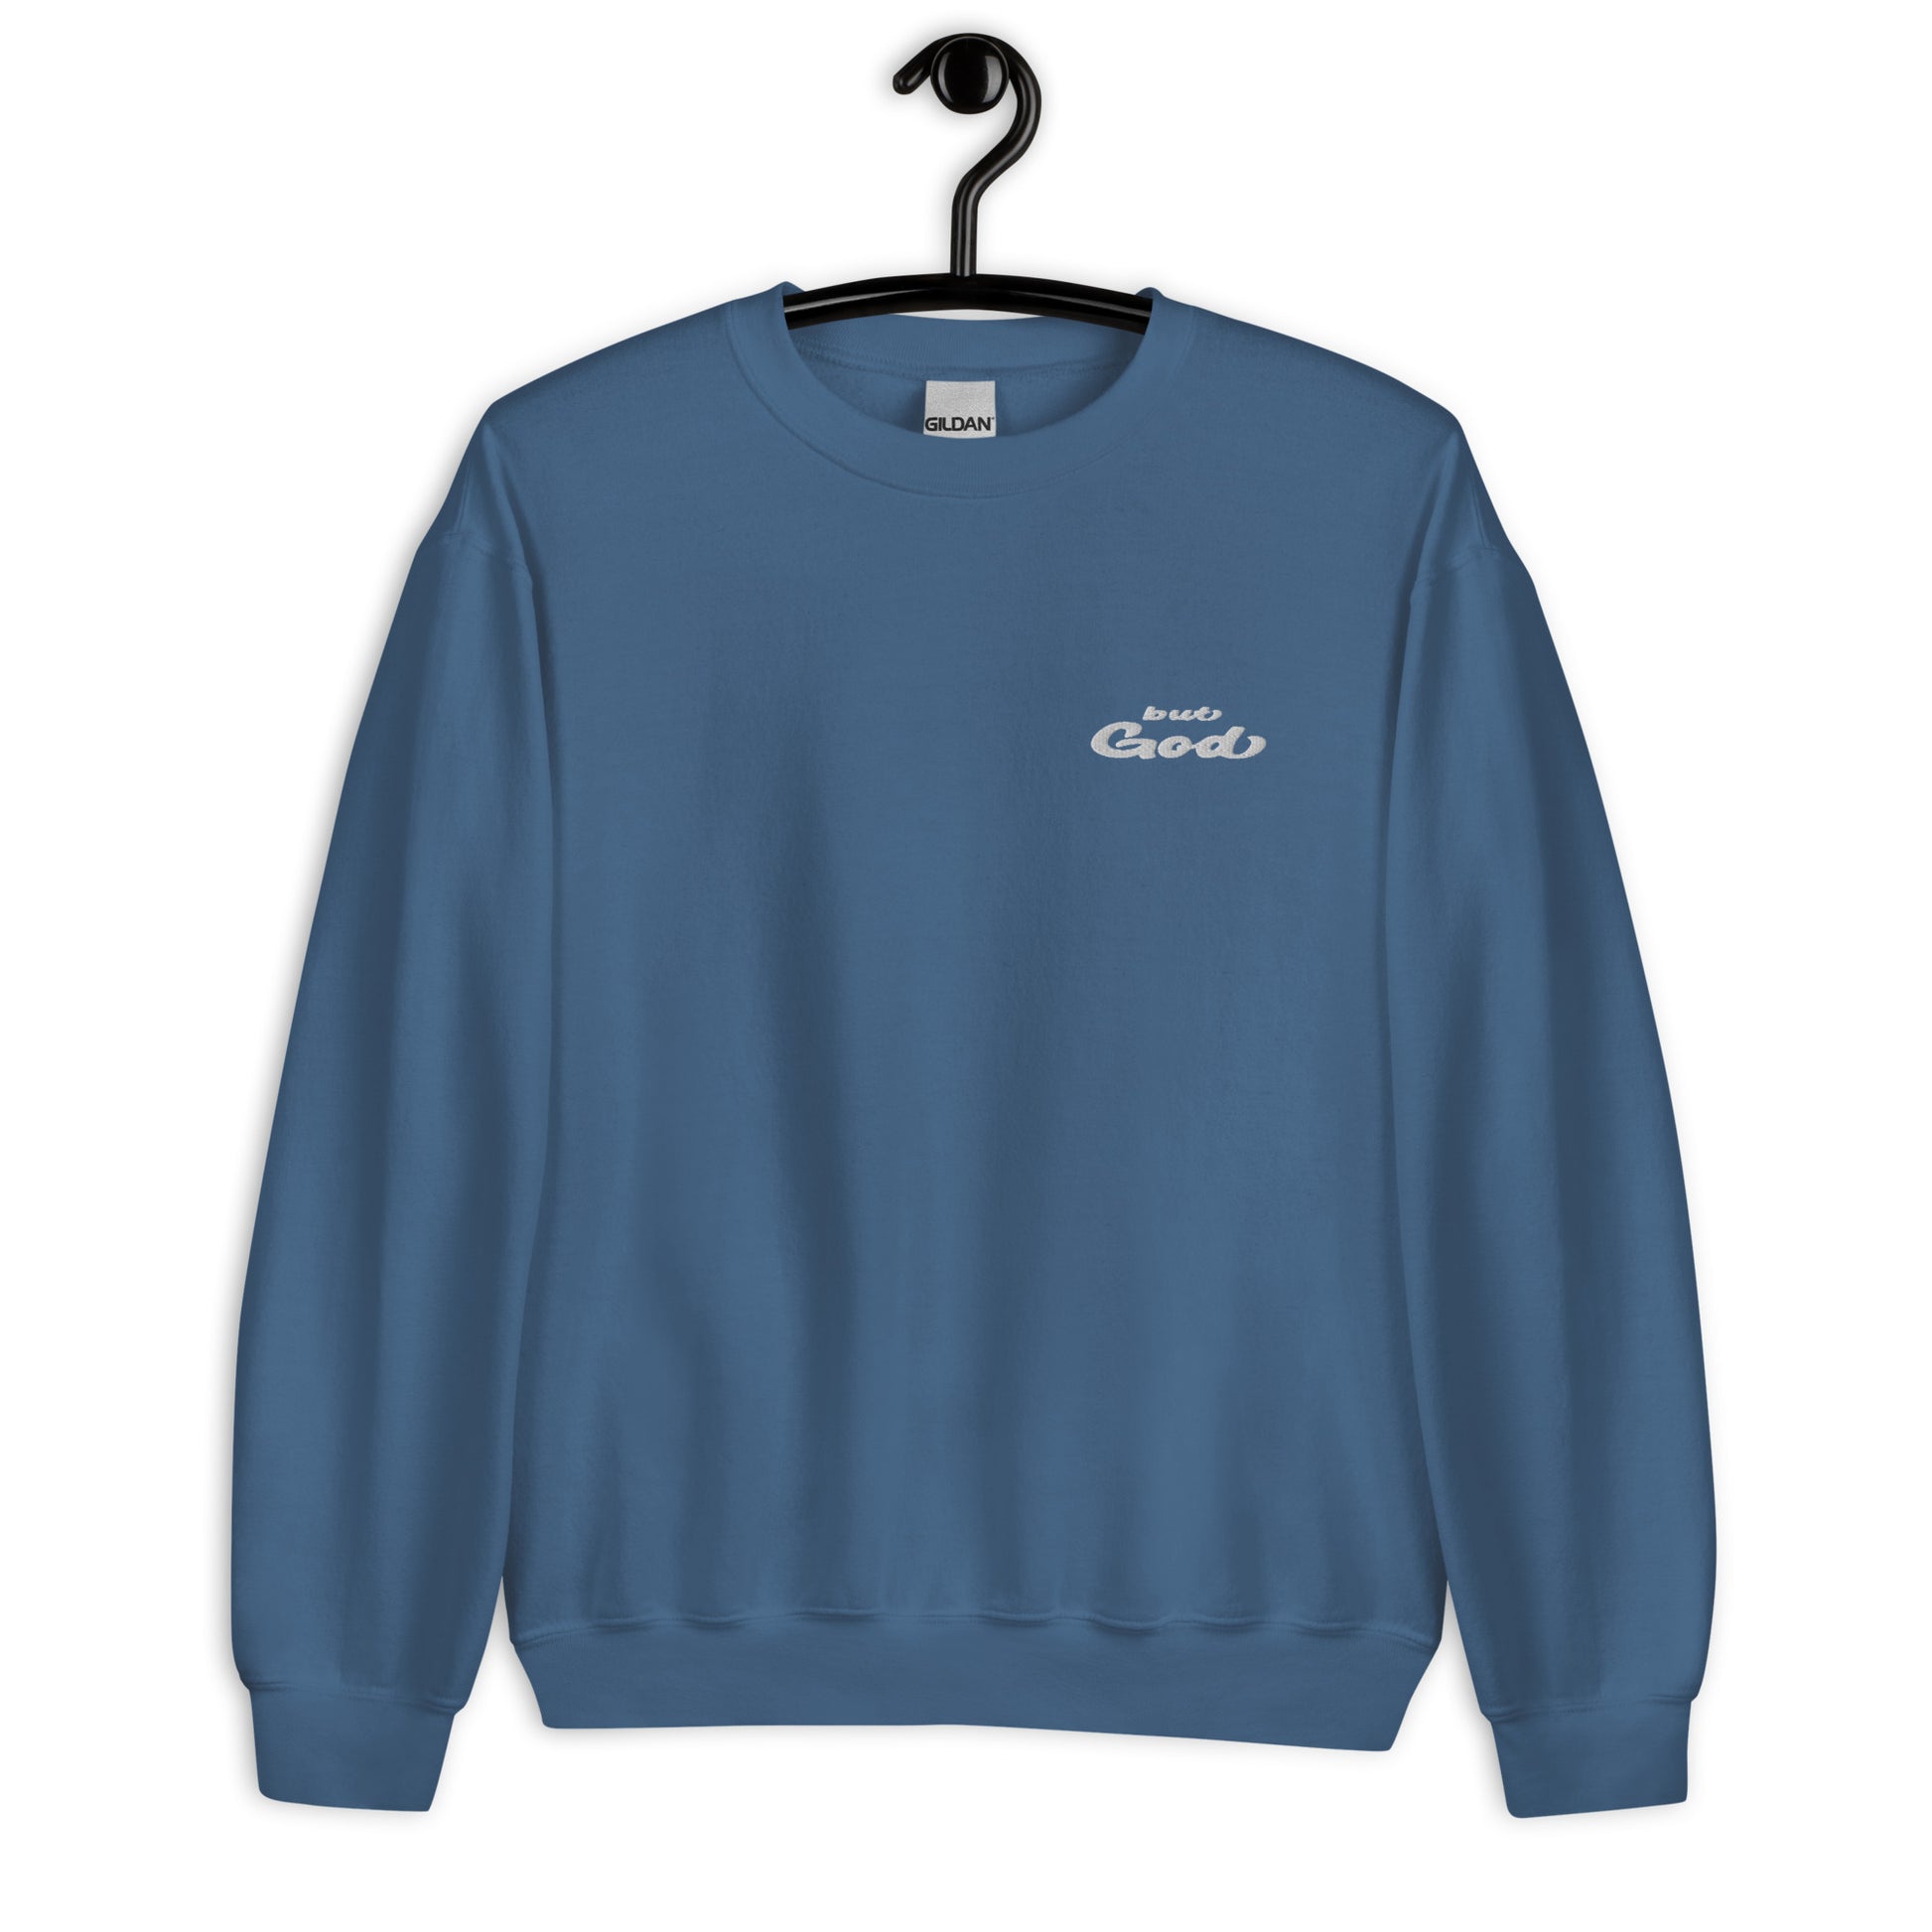 But God Embroidered Unisex Sweatshirt indigo blue on hanger